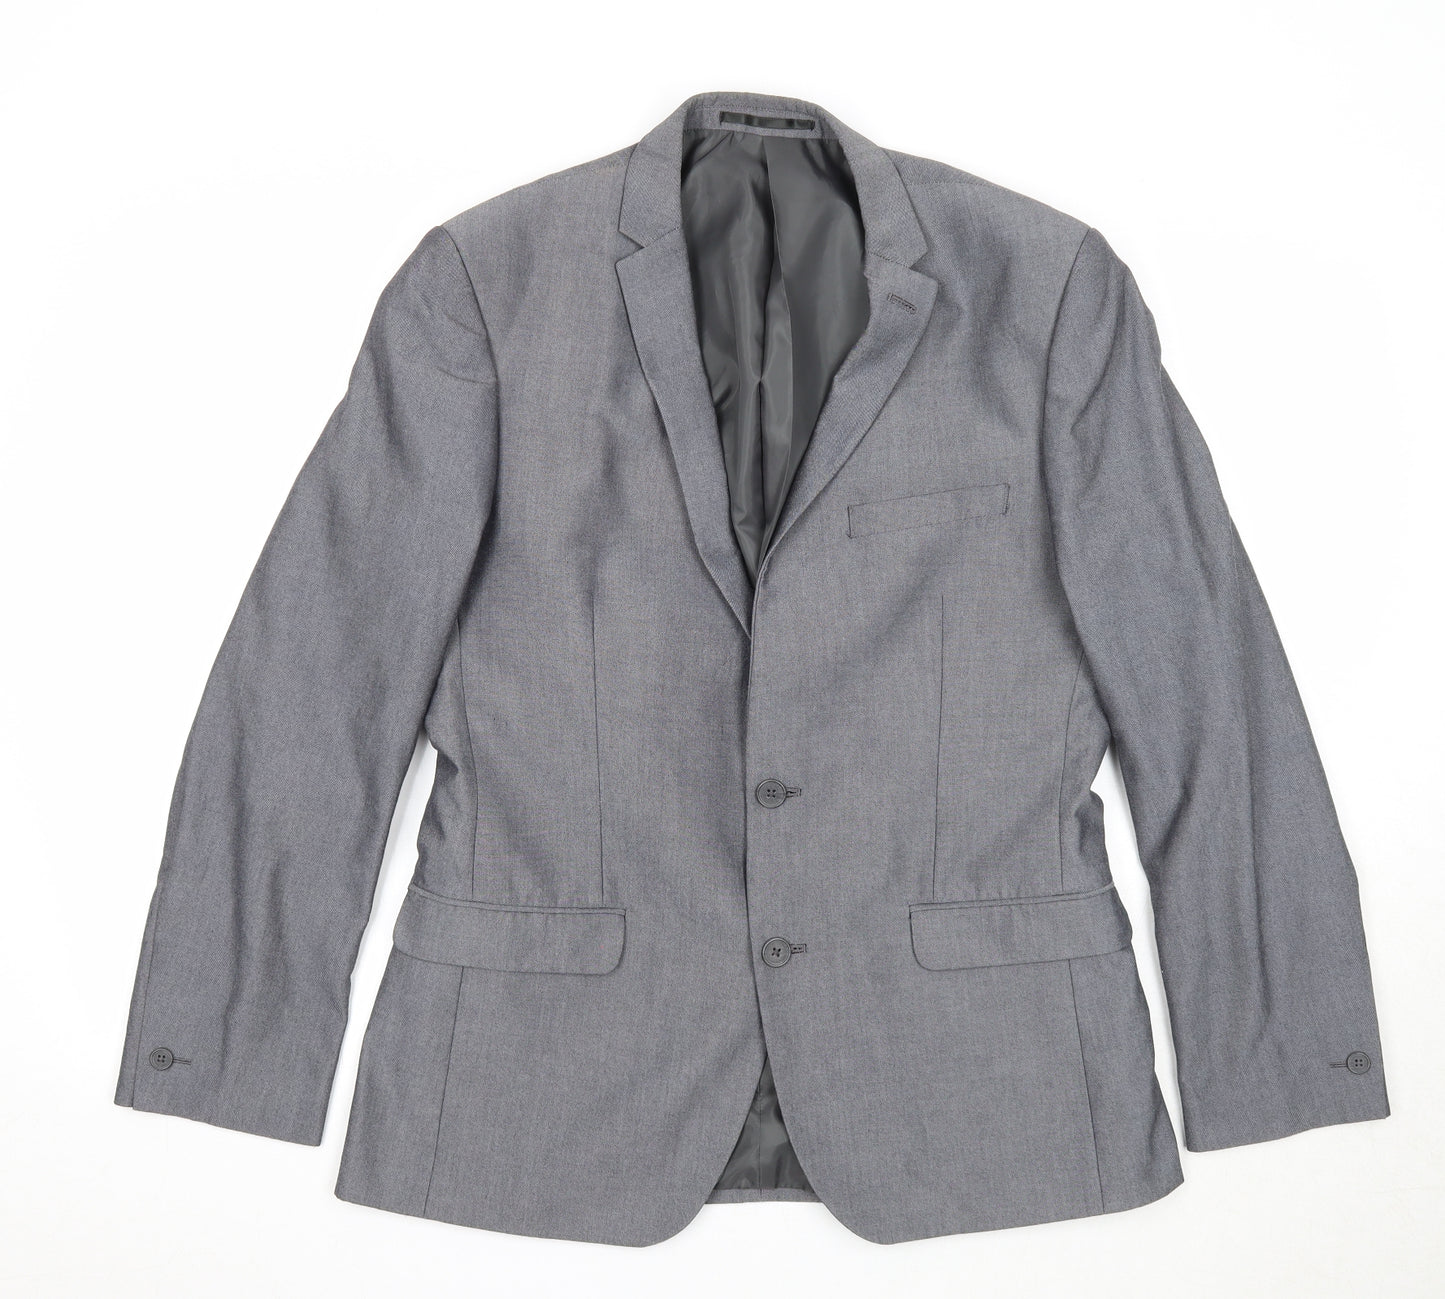 Red Herring Mens Grey Polyester Jacket Suit Jacket Size 40 Regular